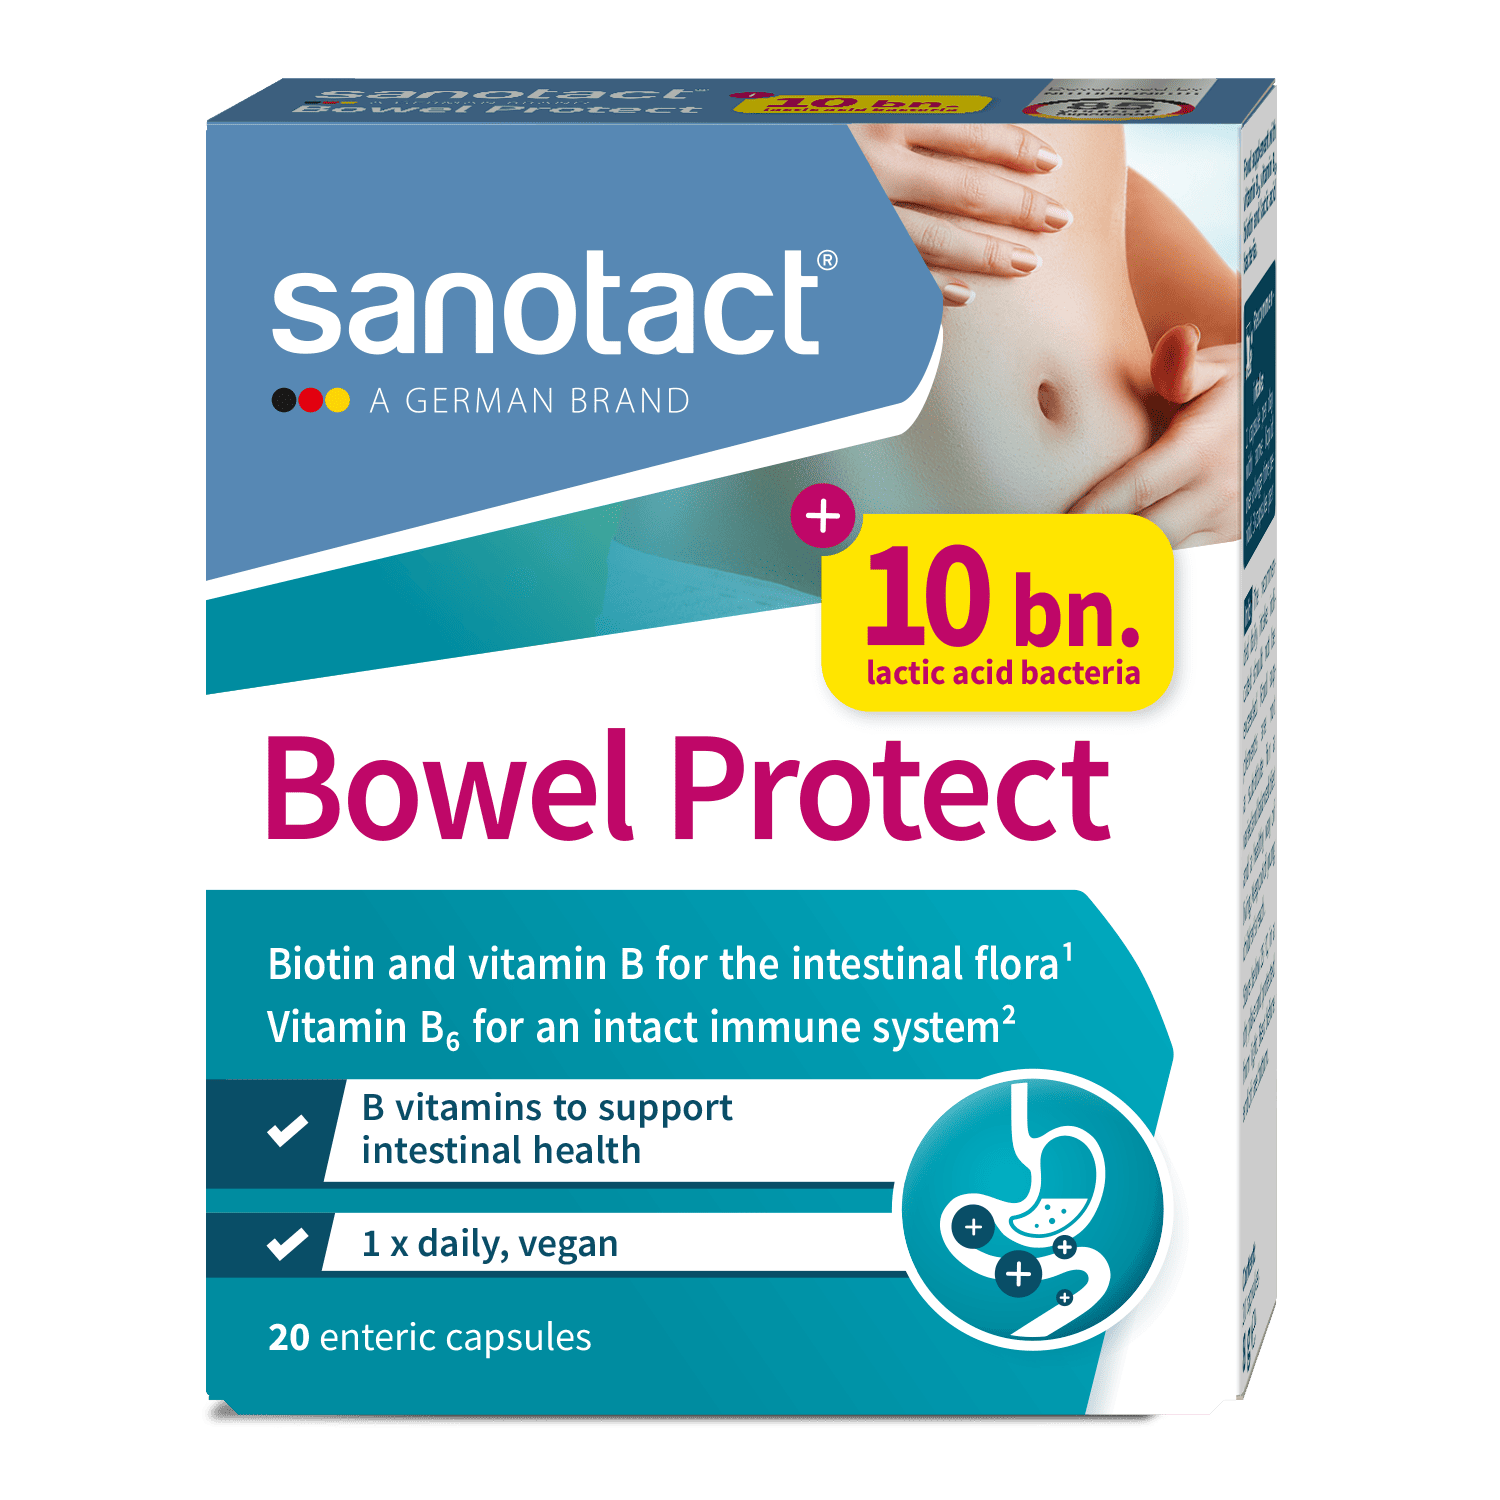 Bowel Protect